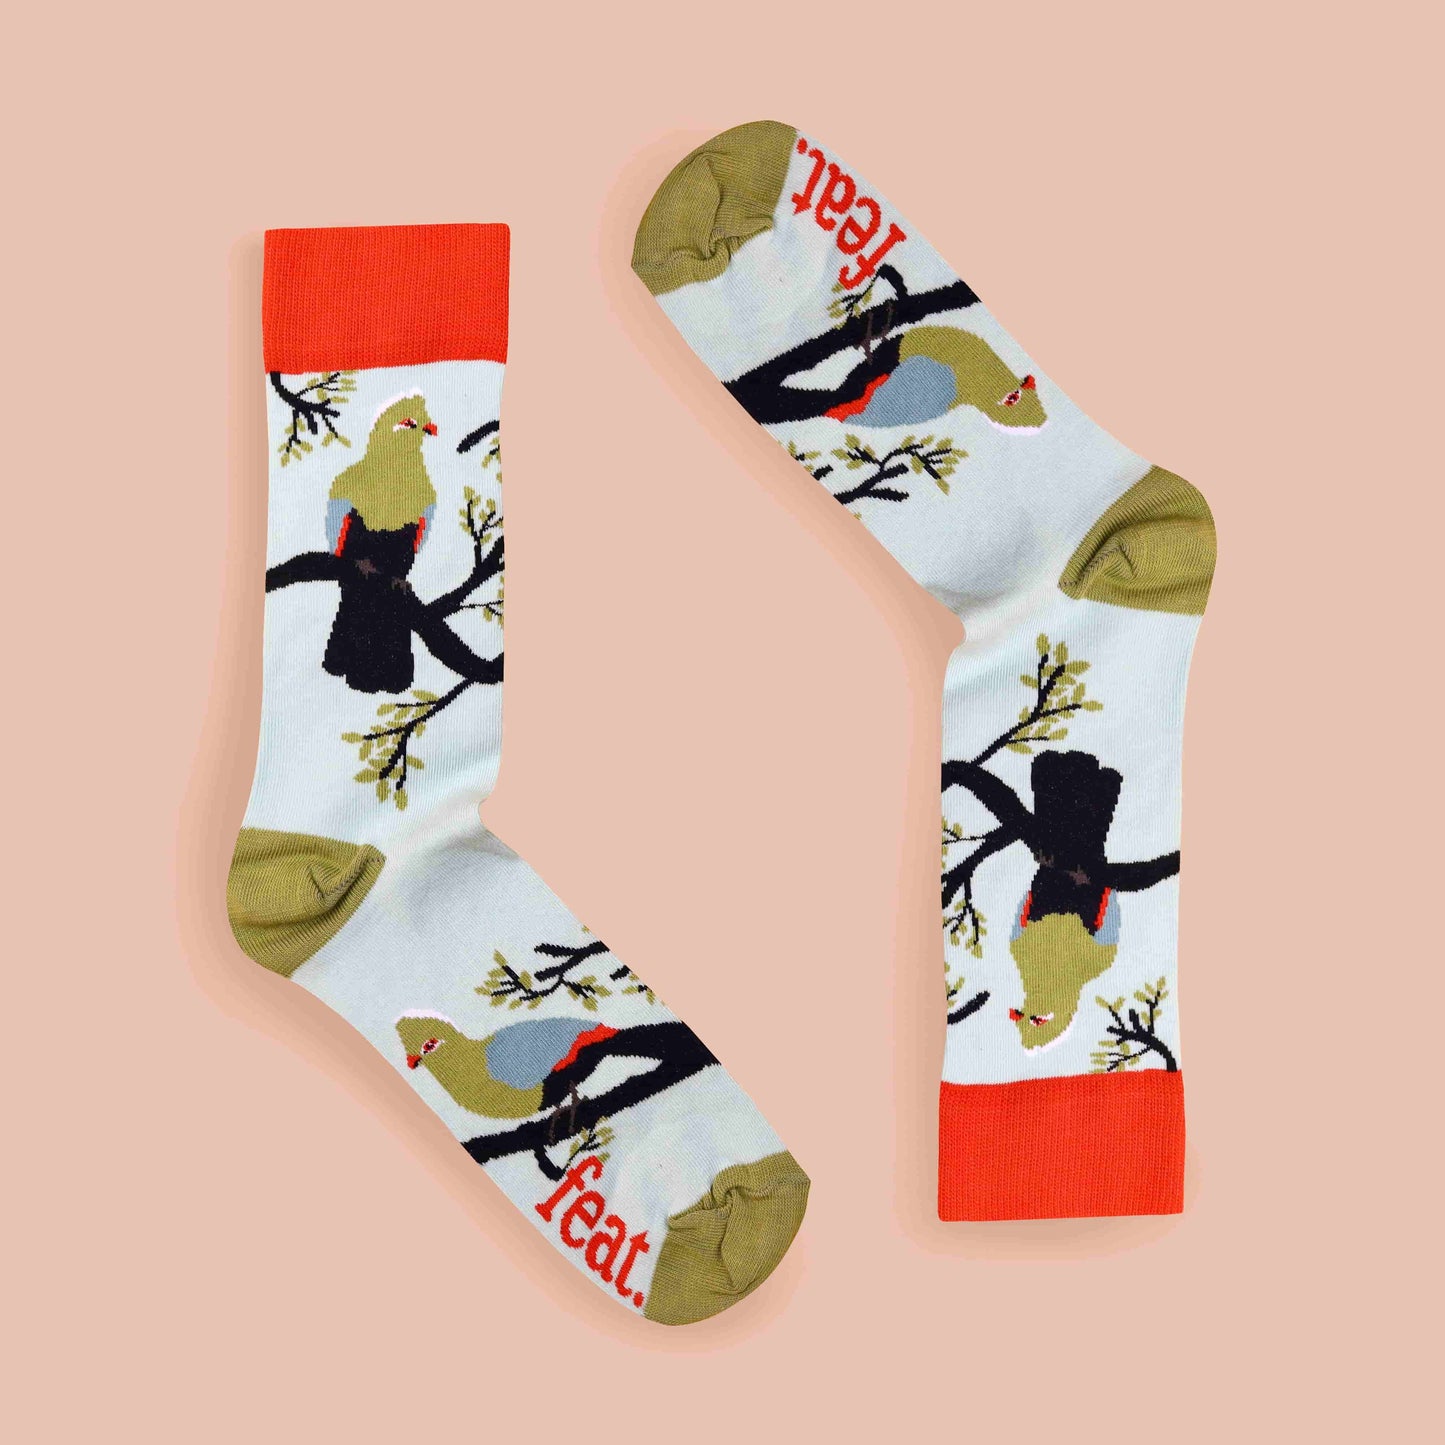 Ladies’ Knysna Loerie socks coral background mirrored